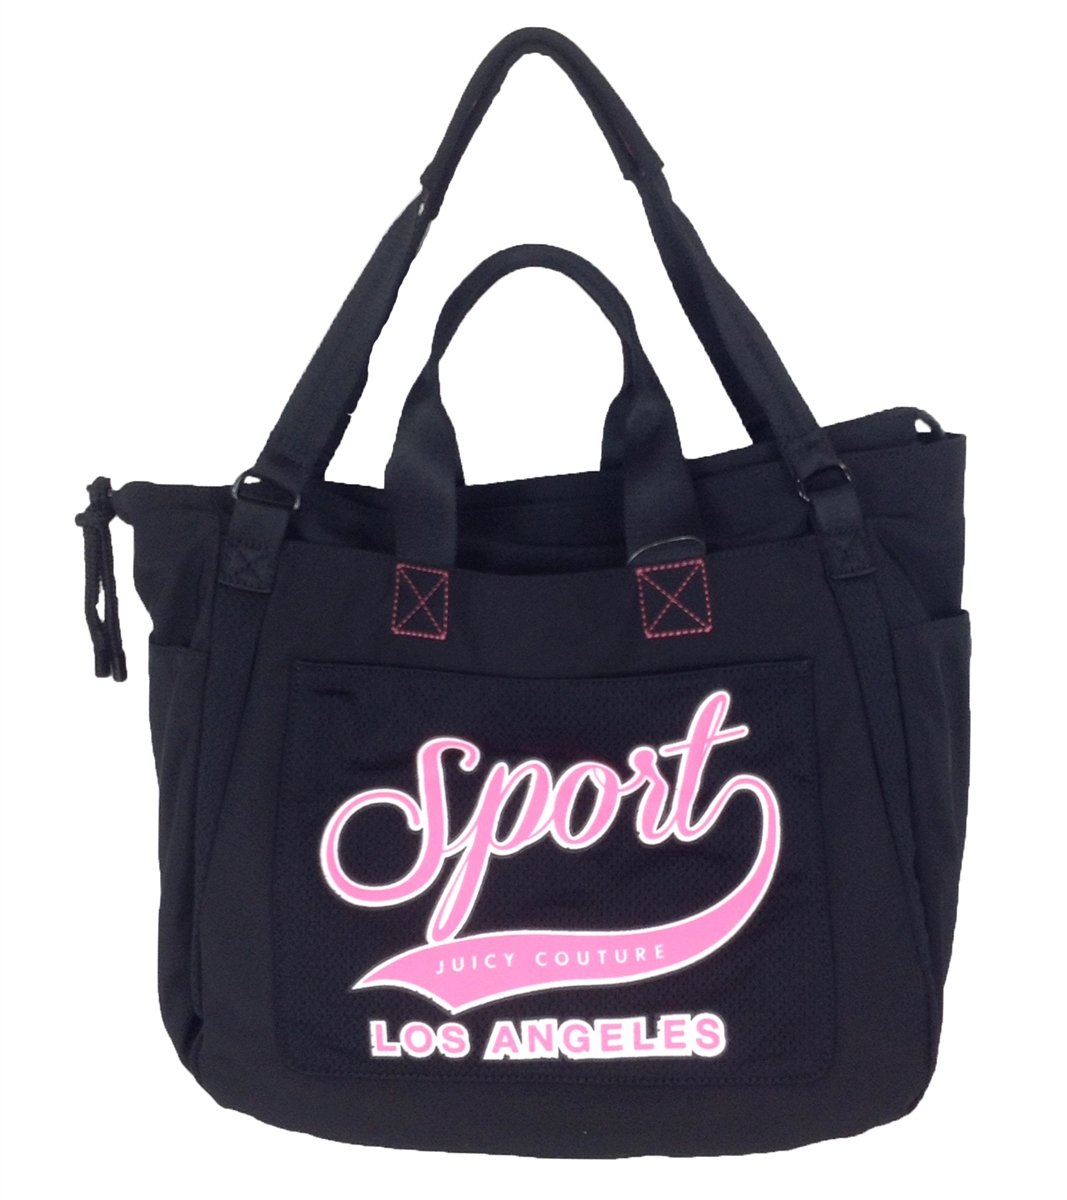 Handbag of the Month - Jan 16: Eva Tote (Gym Tote) - Laura Summers